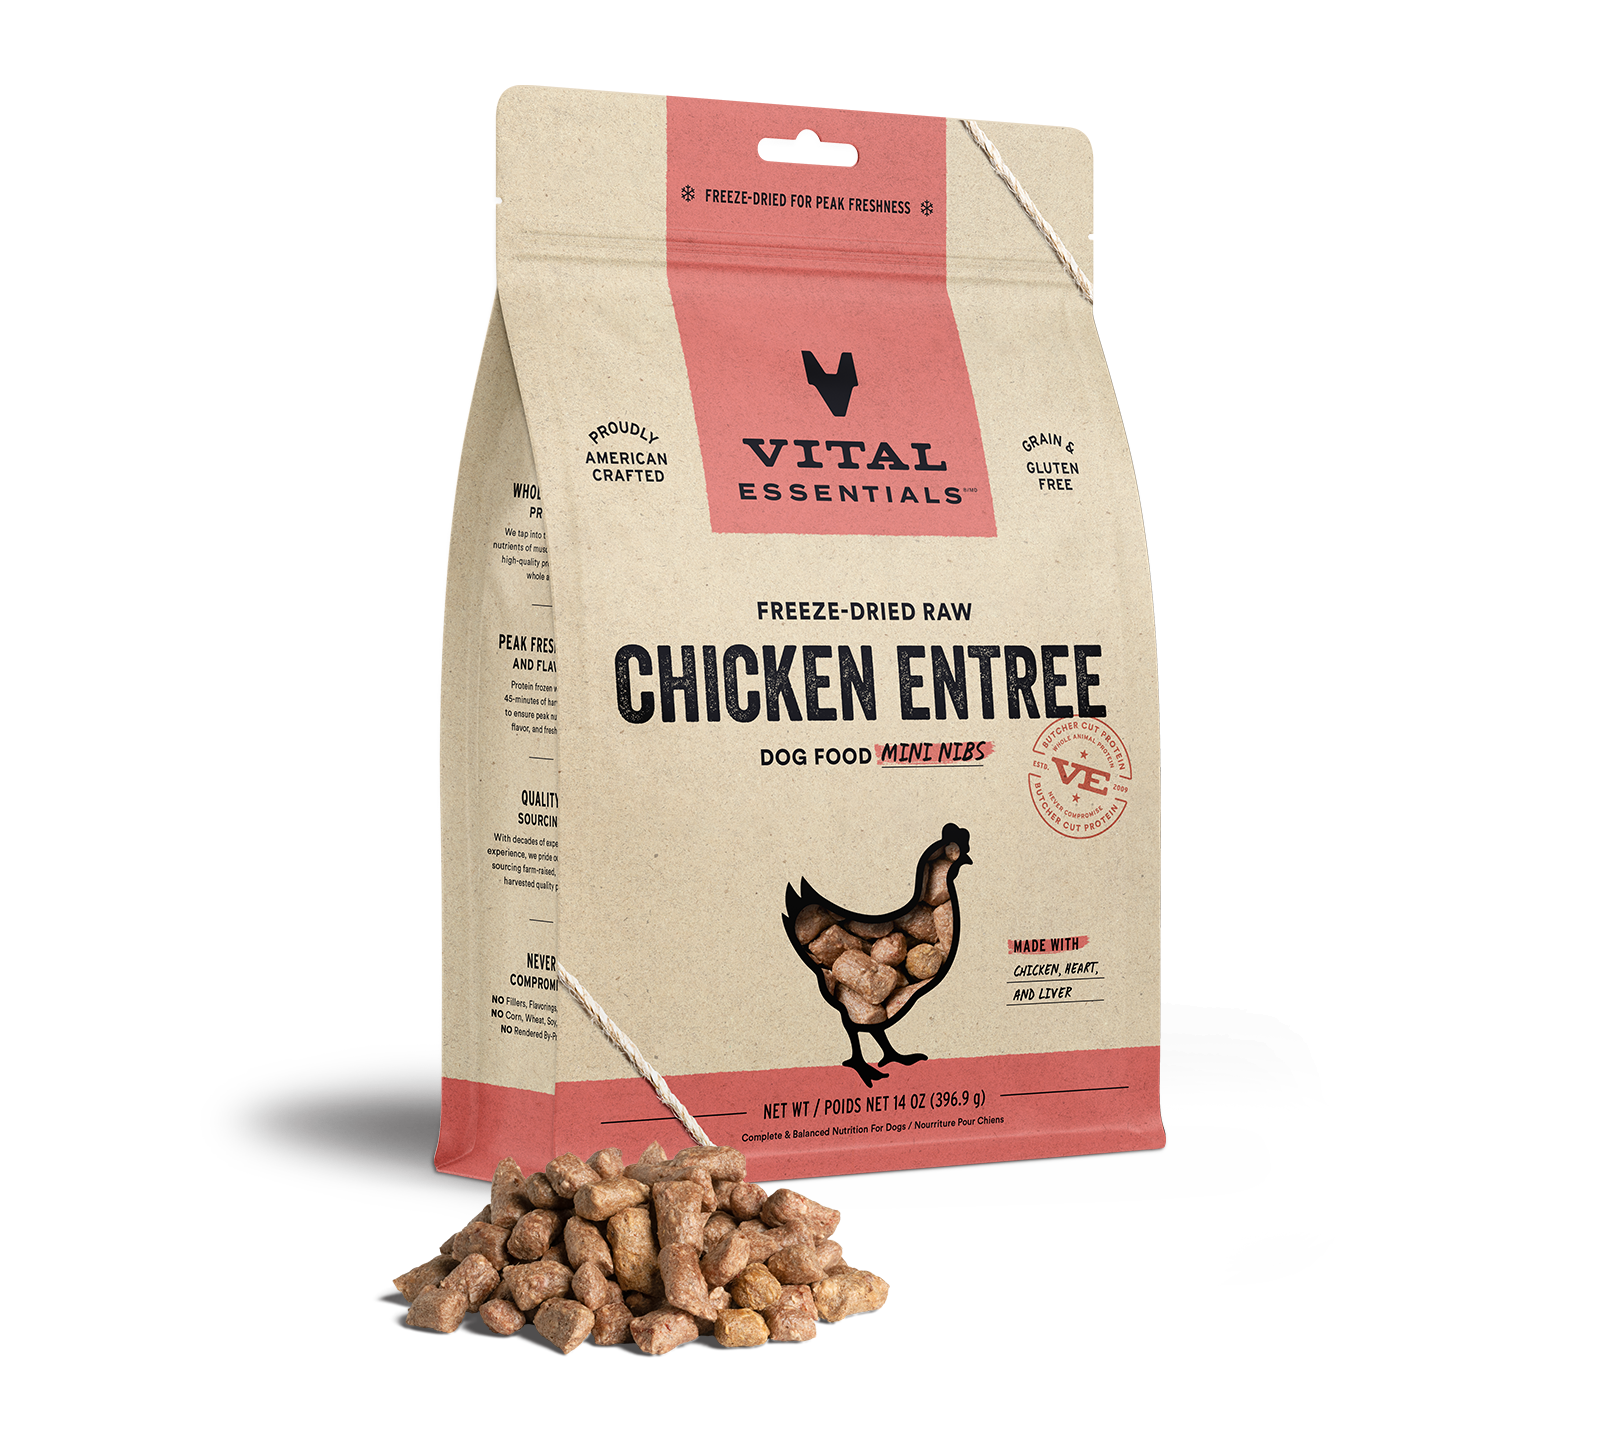 Vital Essentials Freeze-Dried Raw Chicken Entree Dog Food Mini Nibs, 14 oz - Health/First Aid